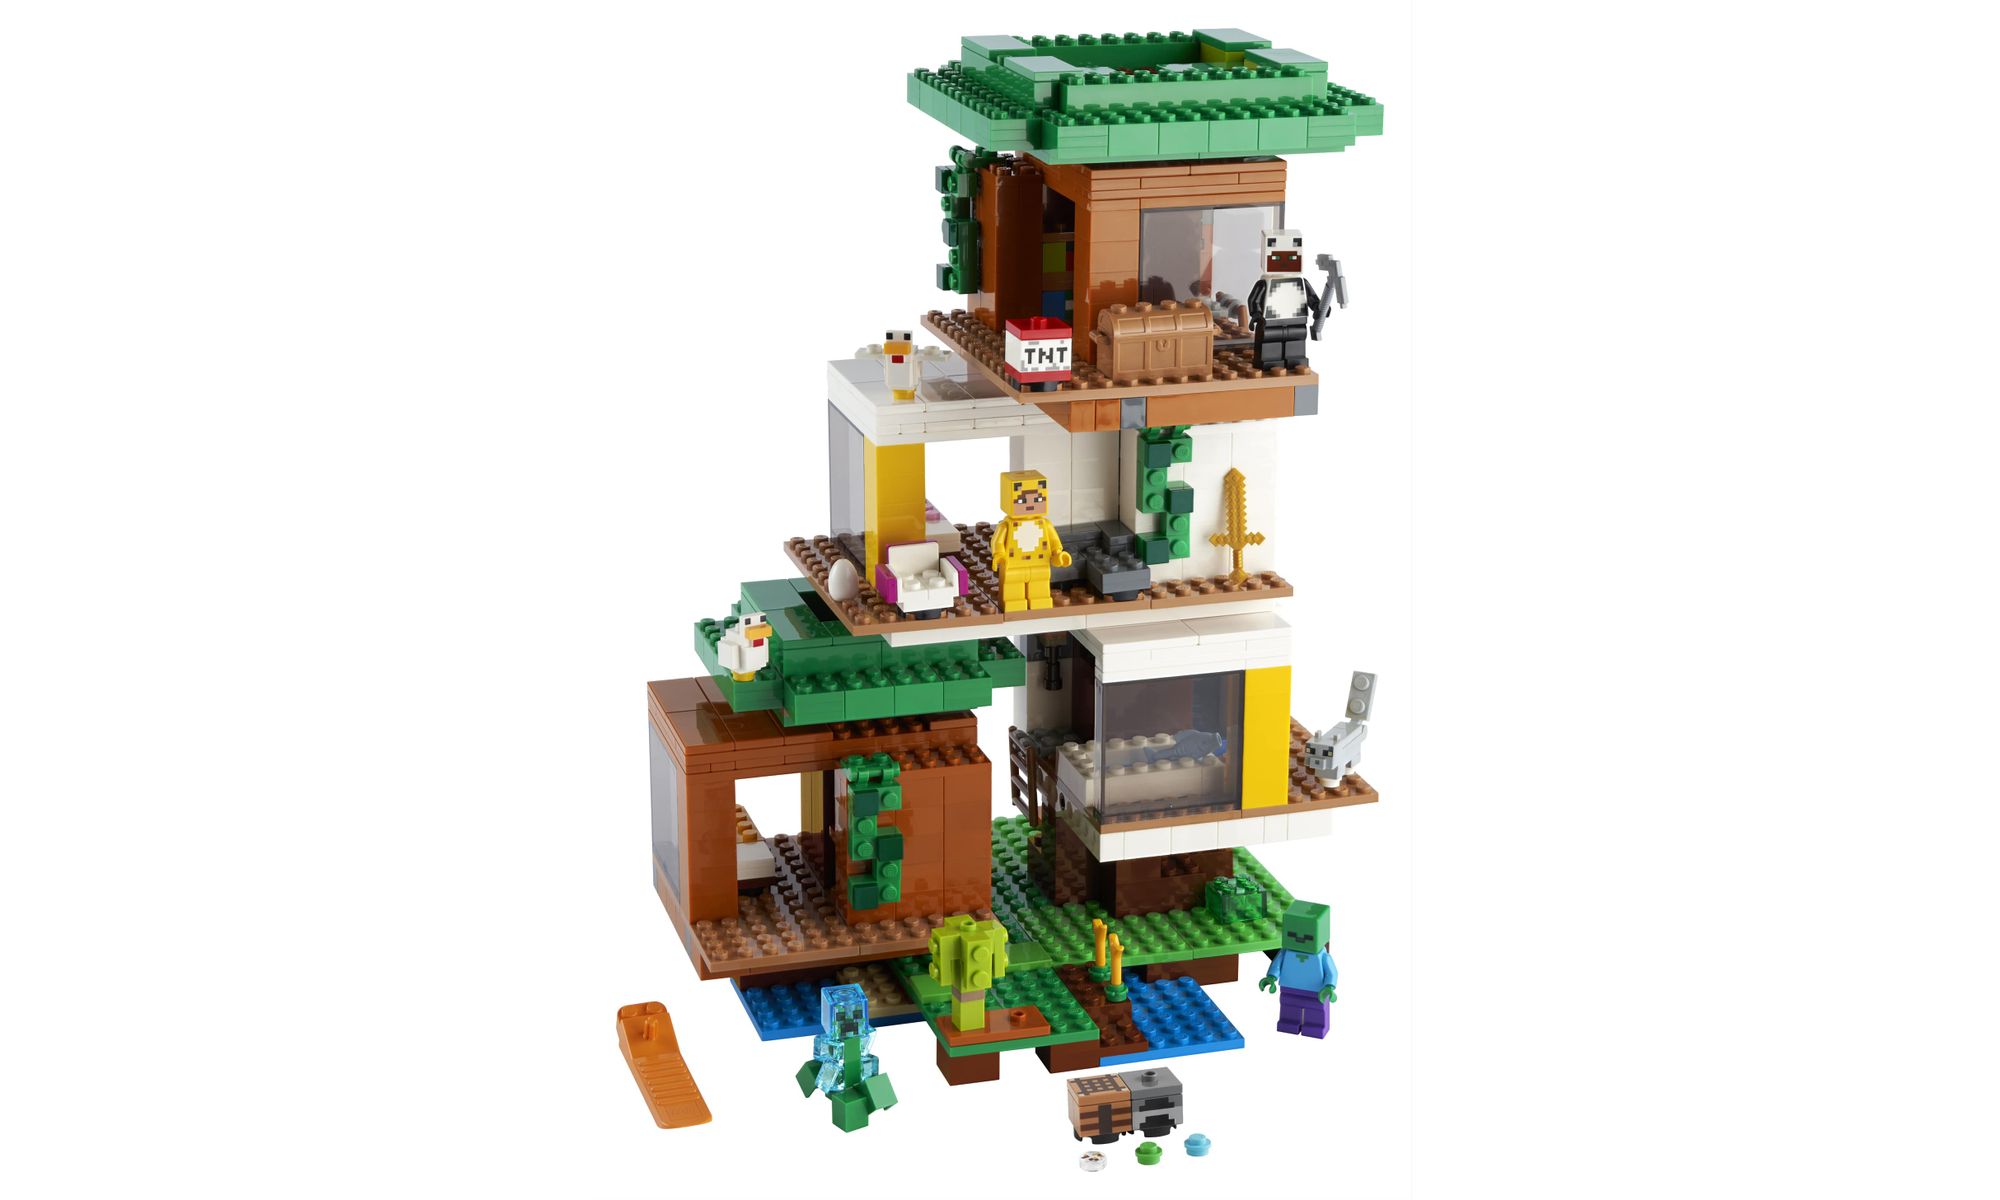 LEGO MINECRAFT A CASA DA ARVORE MODERNA 21174 - Star Brink Brinquedos